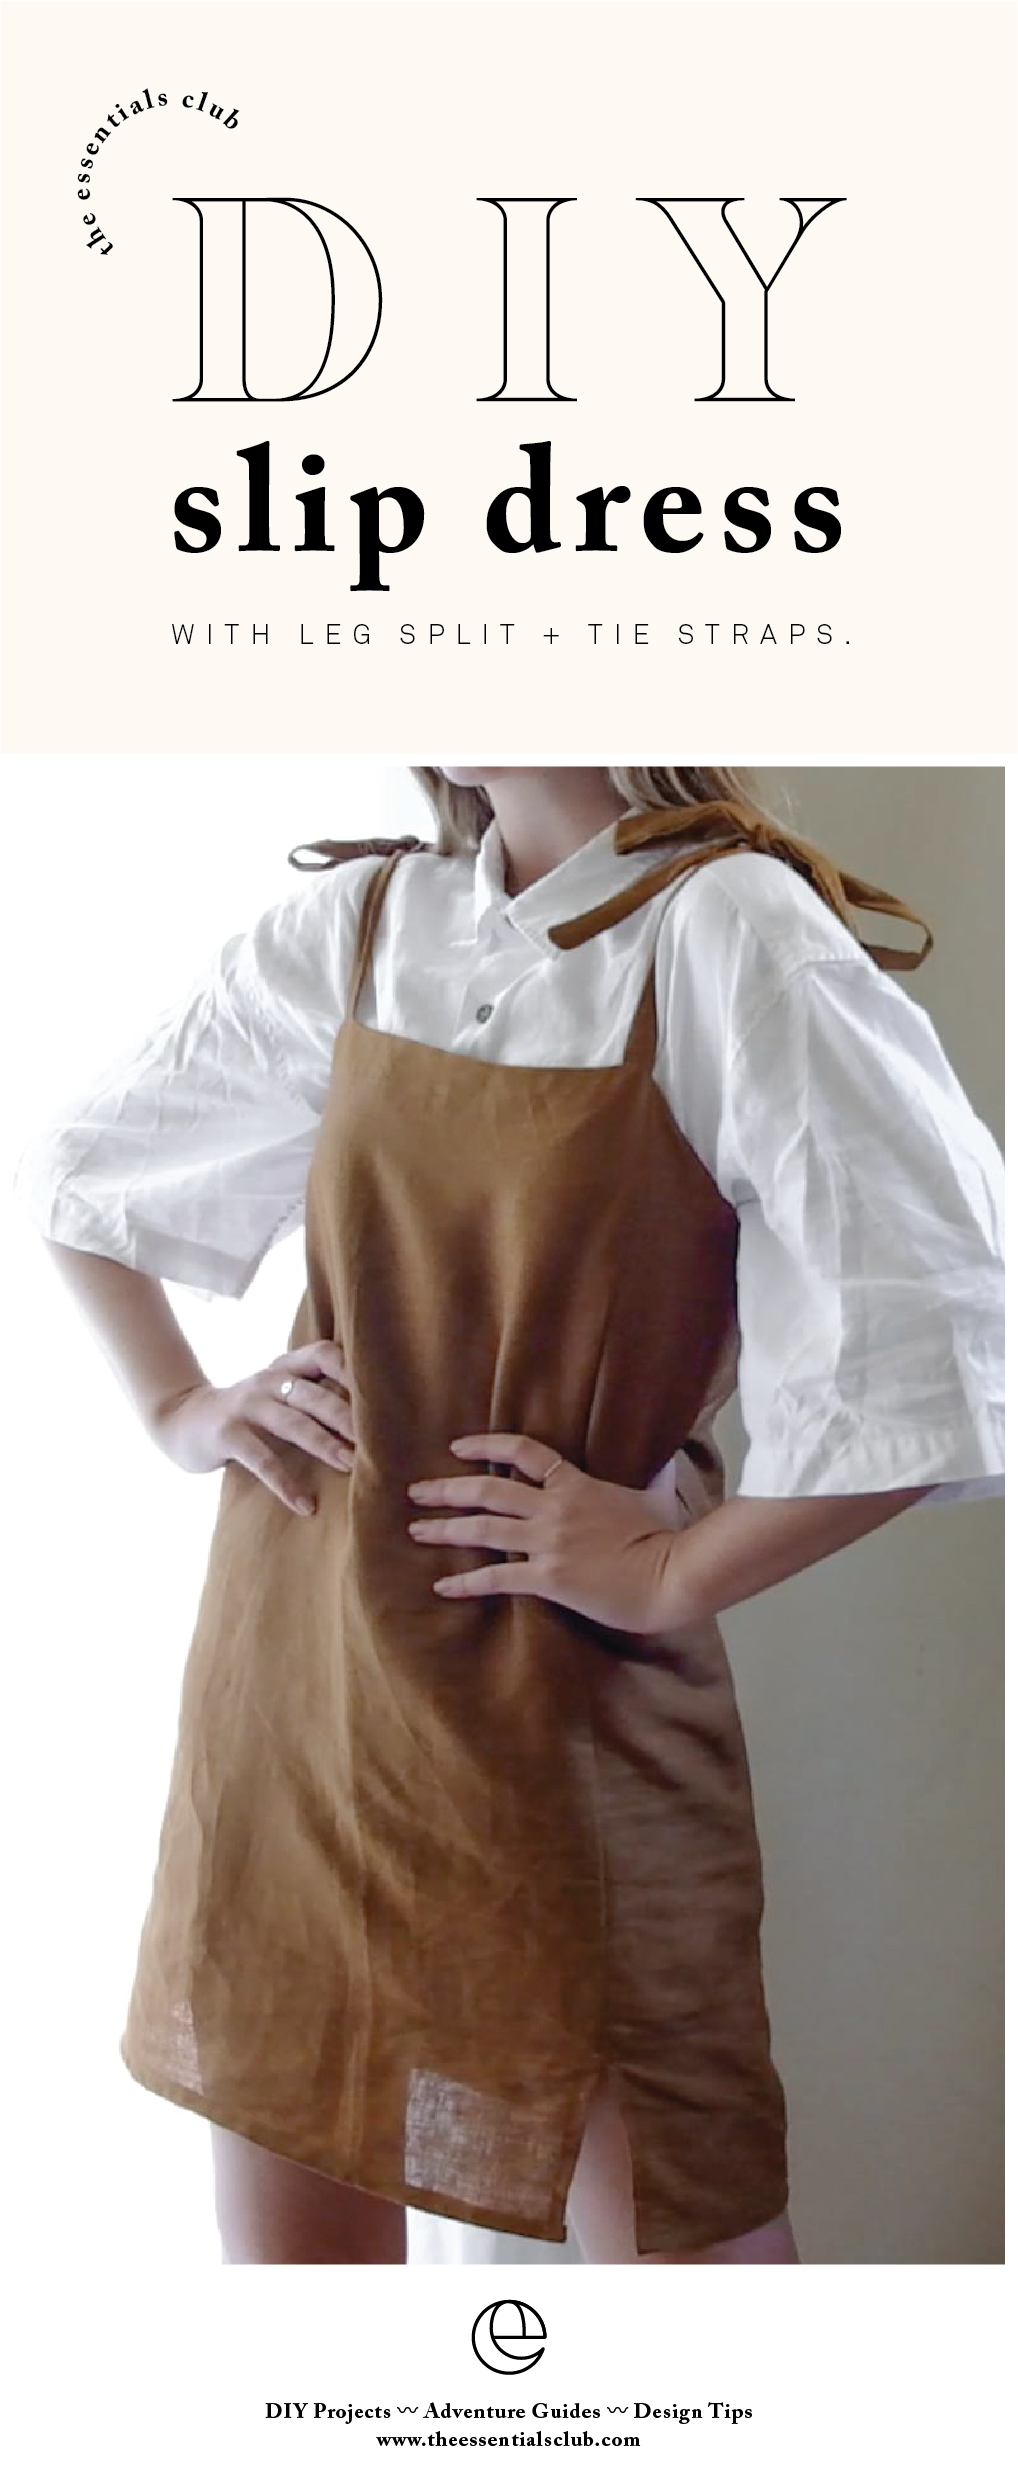 HOW TO make your own slip dress -   12 dress DIY ideas